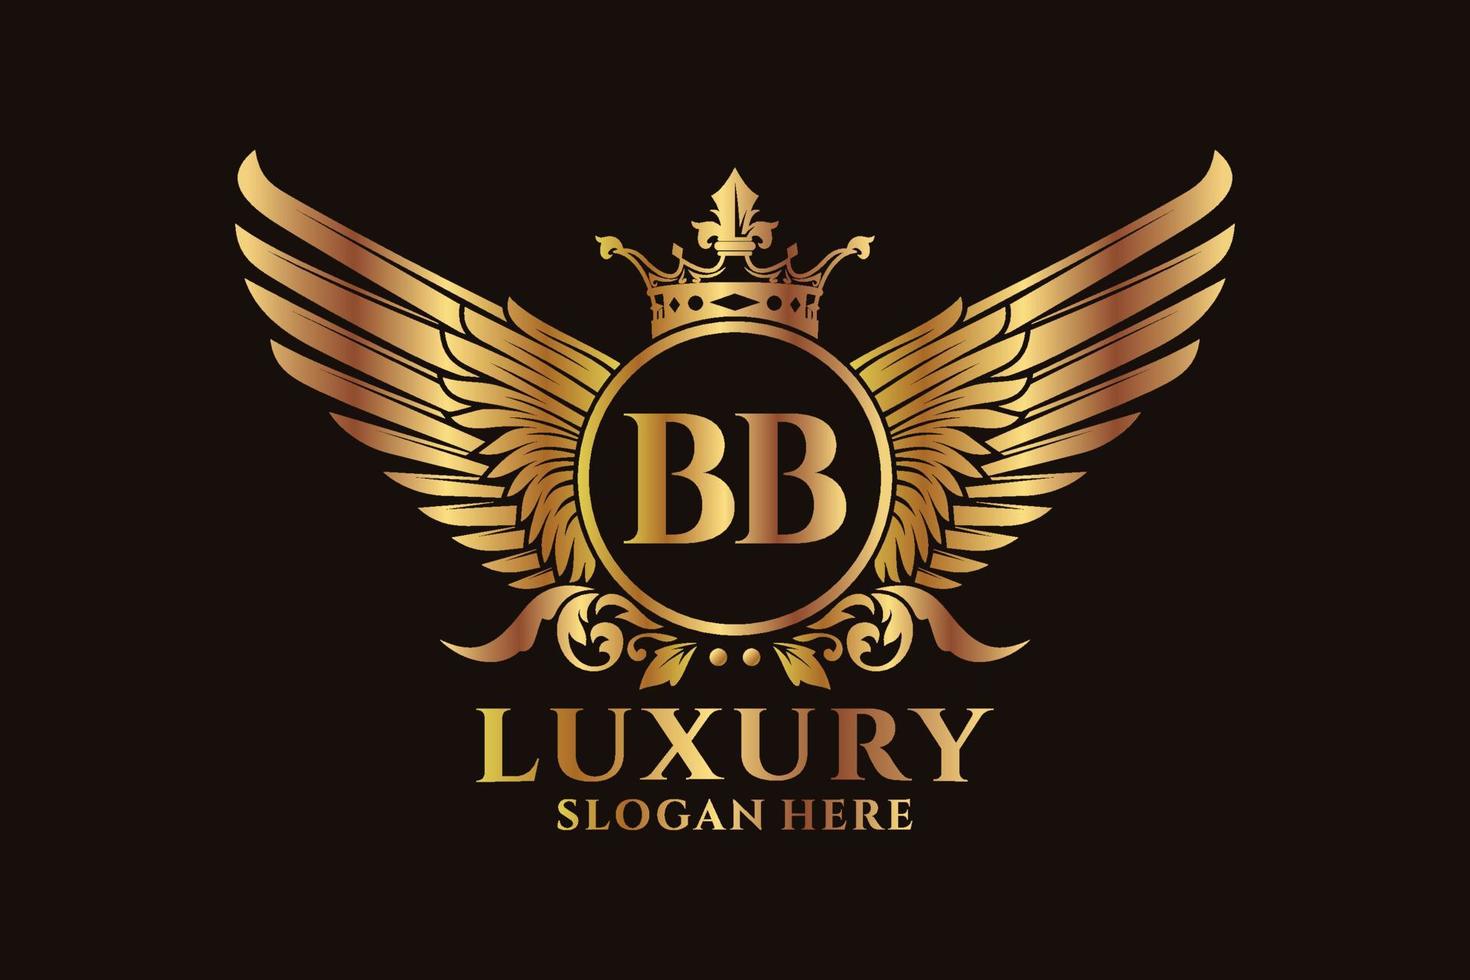 luxe Koninklijk vleugel brief bb kam goud kleur logo vector, zege logo, kam logo, vleugel logo, vector logo sjabloon.